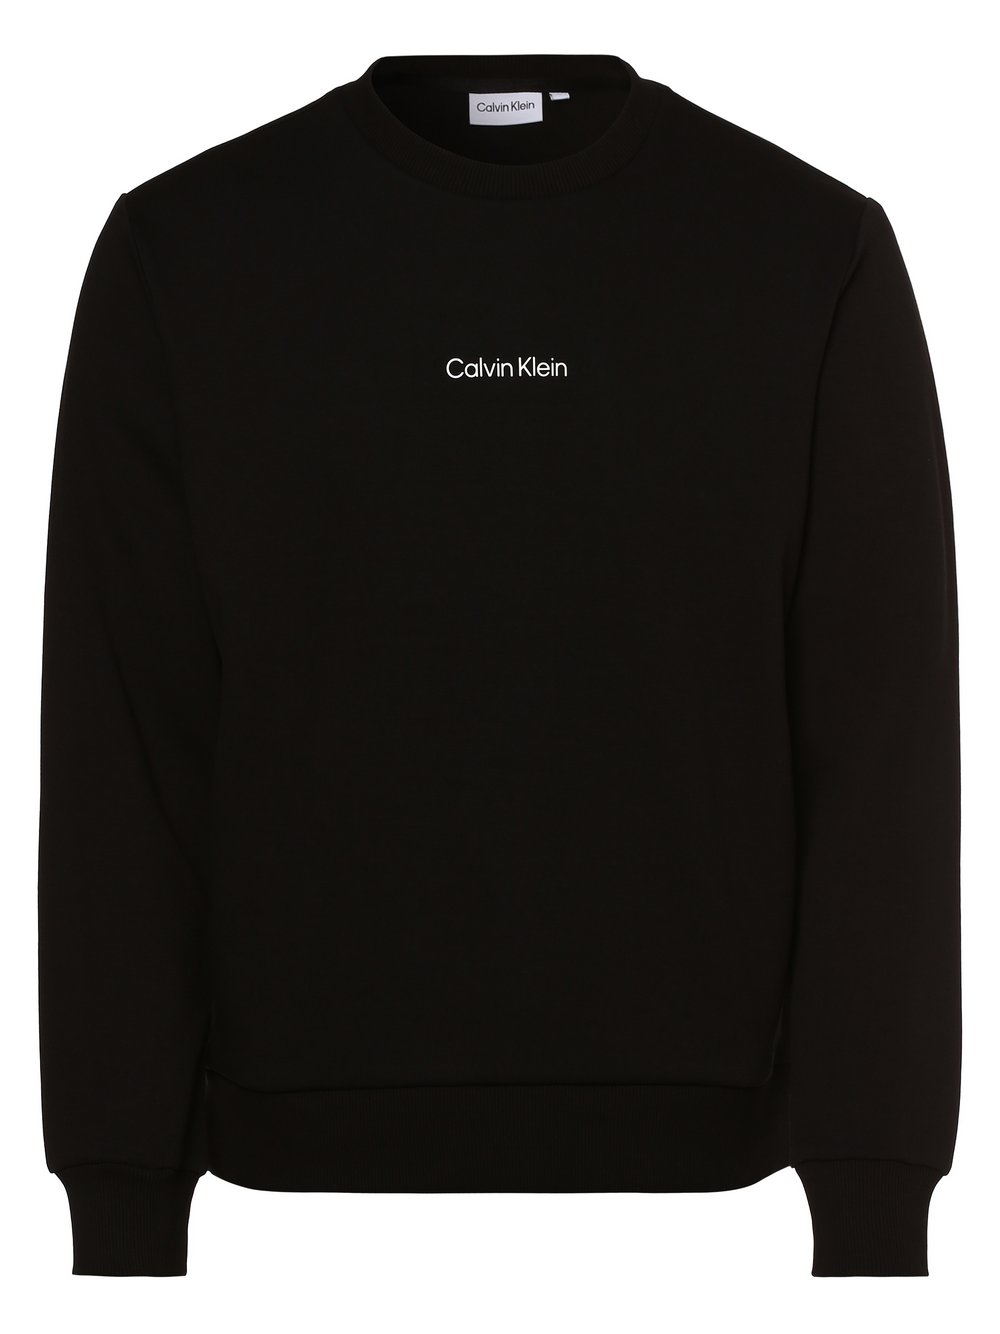 Calvin Klein - Męska bluza nierozpinana, czarny